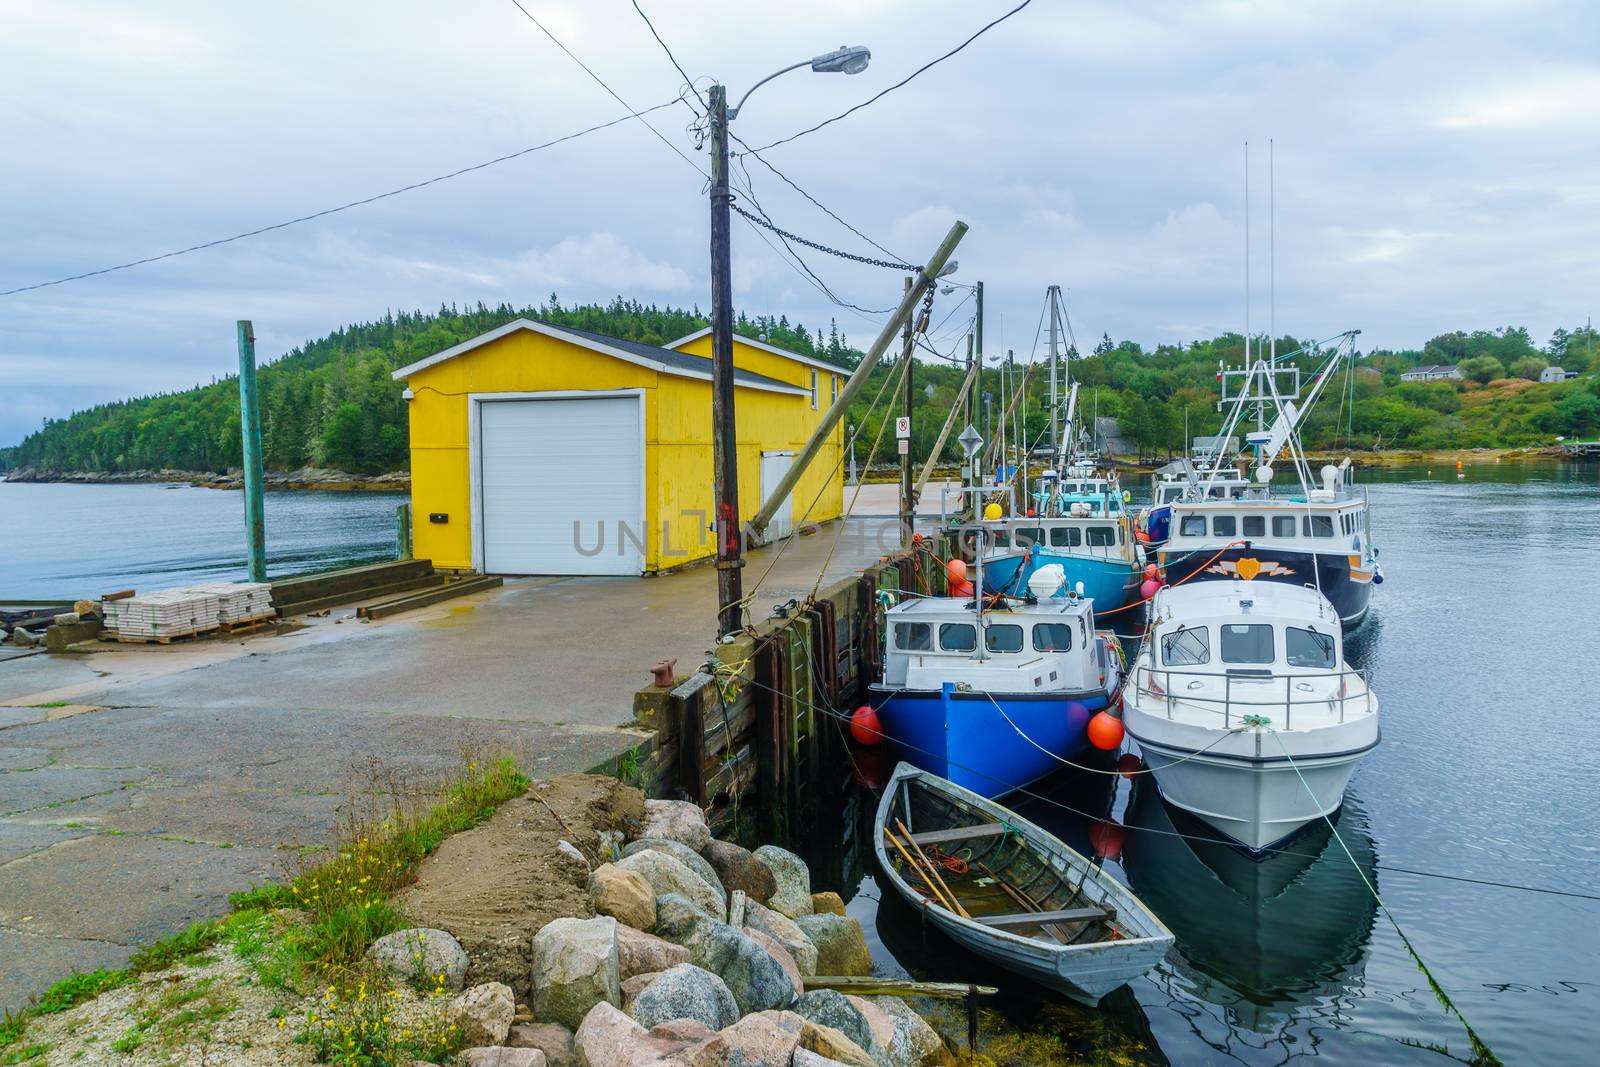 Northwest Cove, Nova Scotia by RnDmS